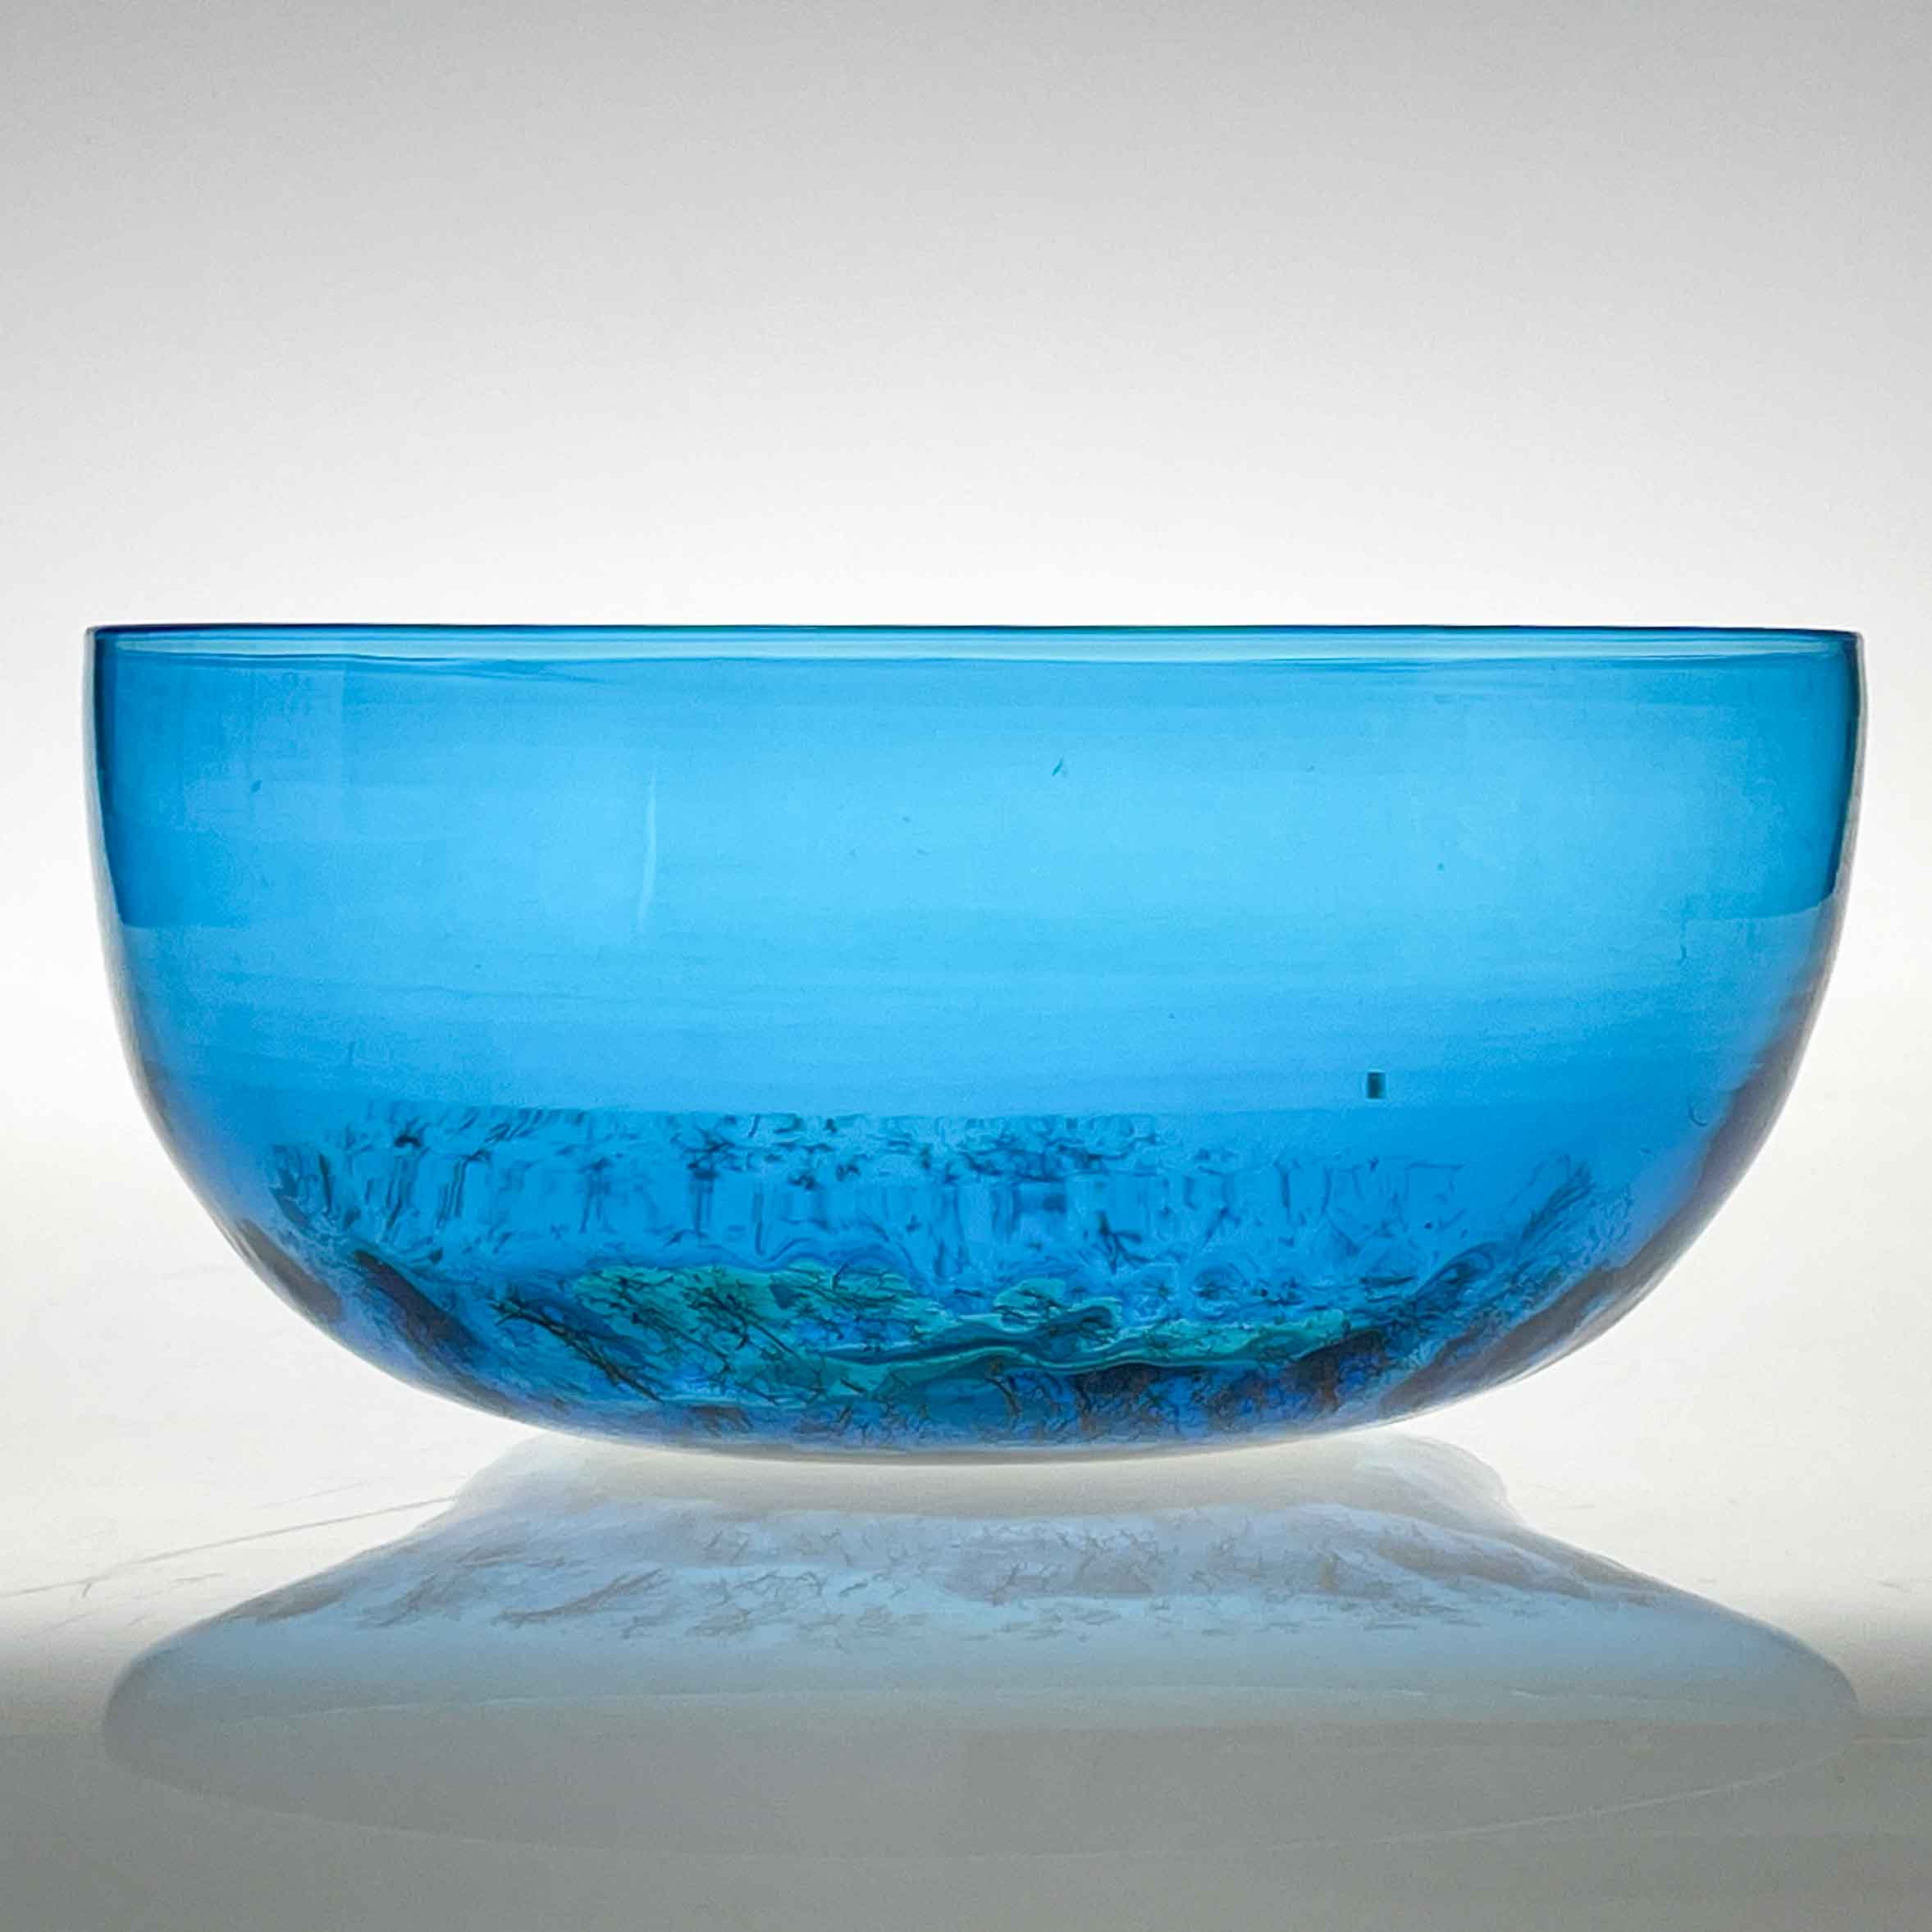 Tapio Wirkkala - Glass art-object "Inari", model 537.12 - Venini, Italy circa 1985